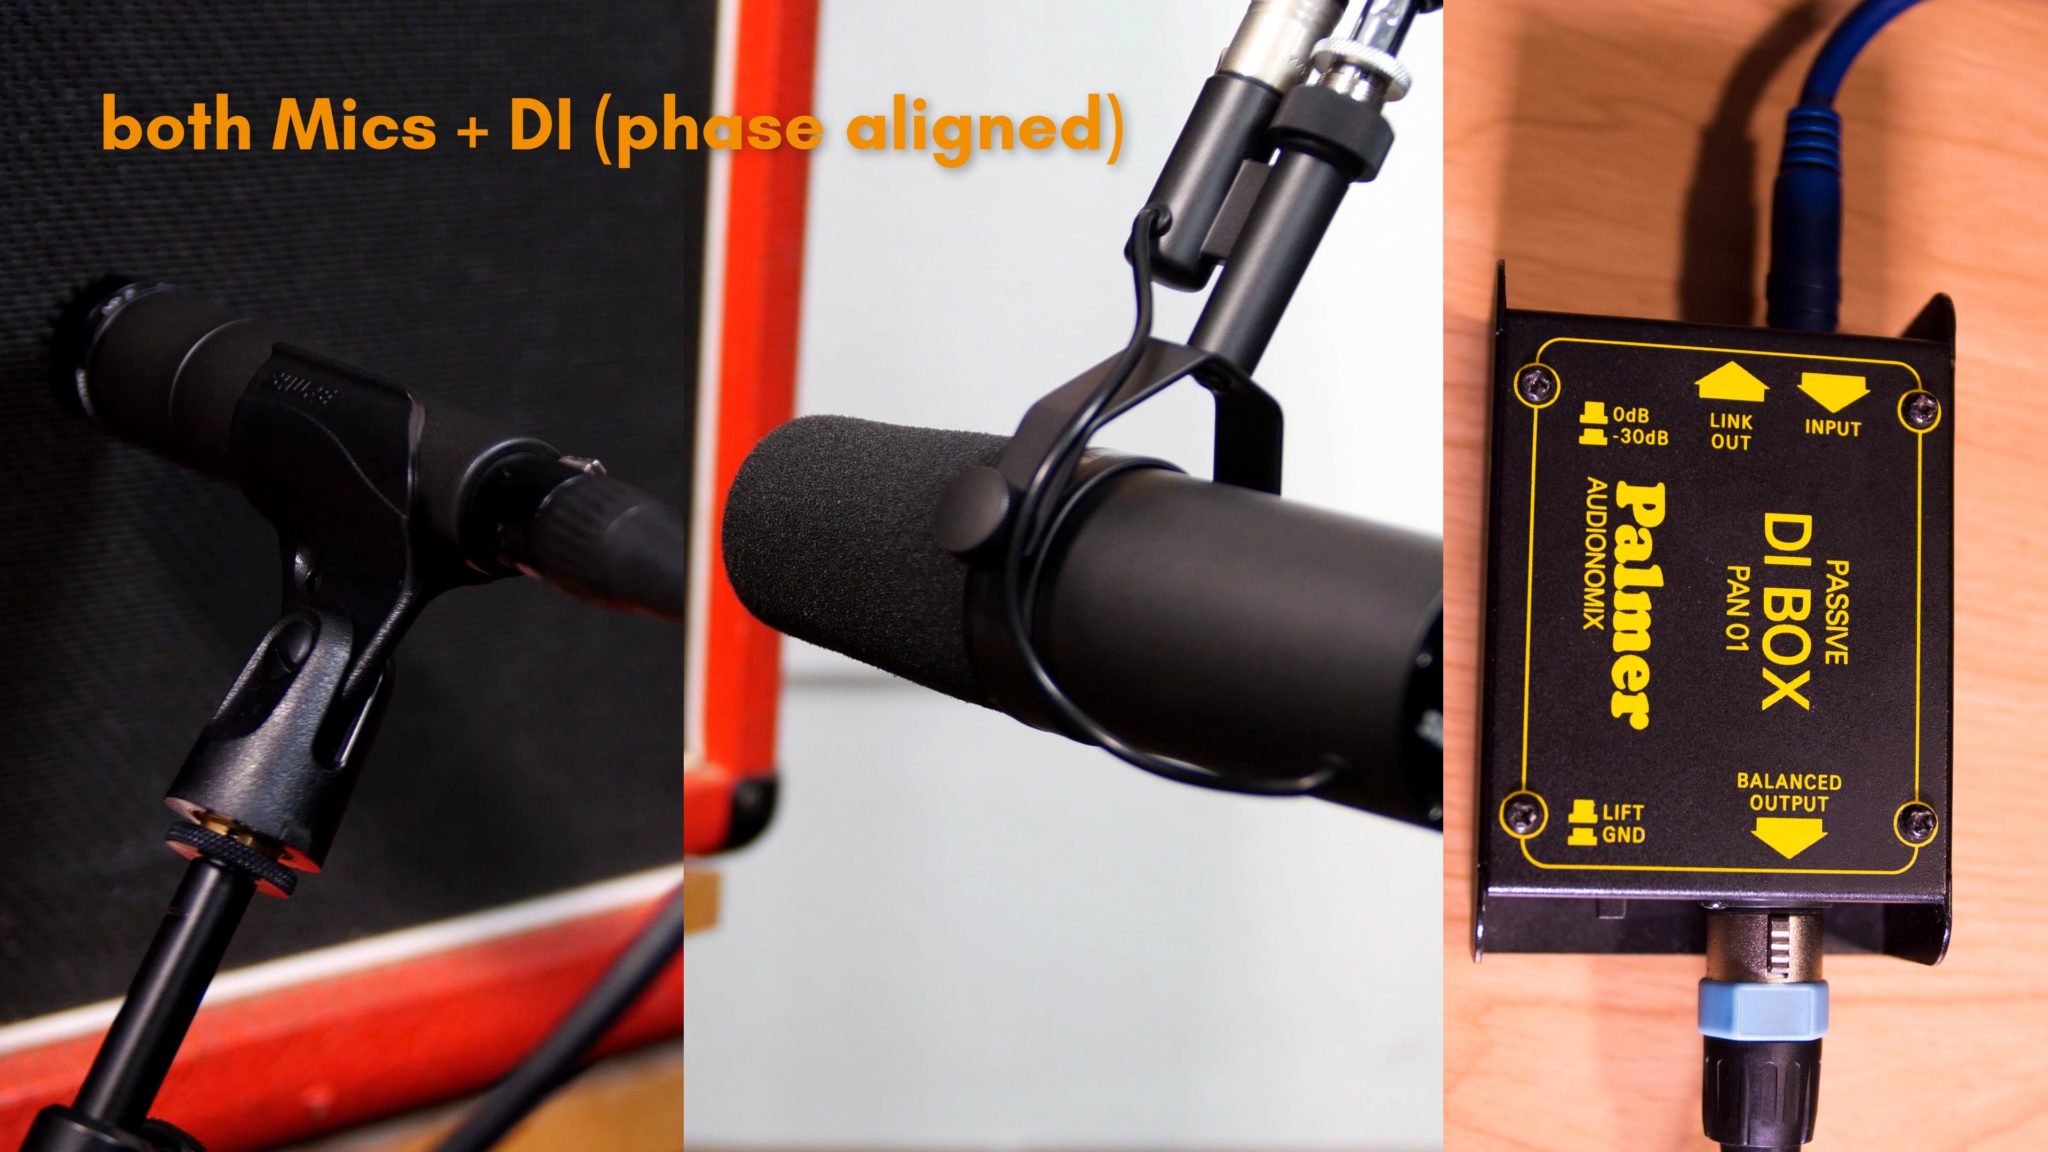 Blending of 2 guitar mics (Shure SM57 & Shure SM7B) and the DI signal through a DI box